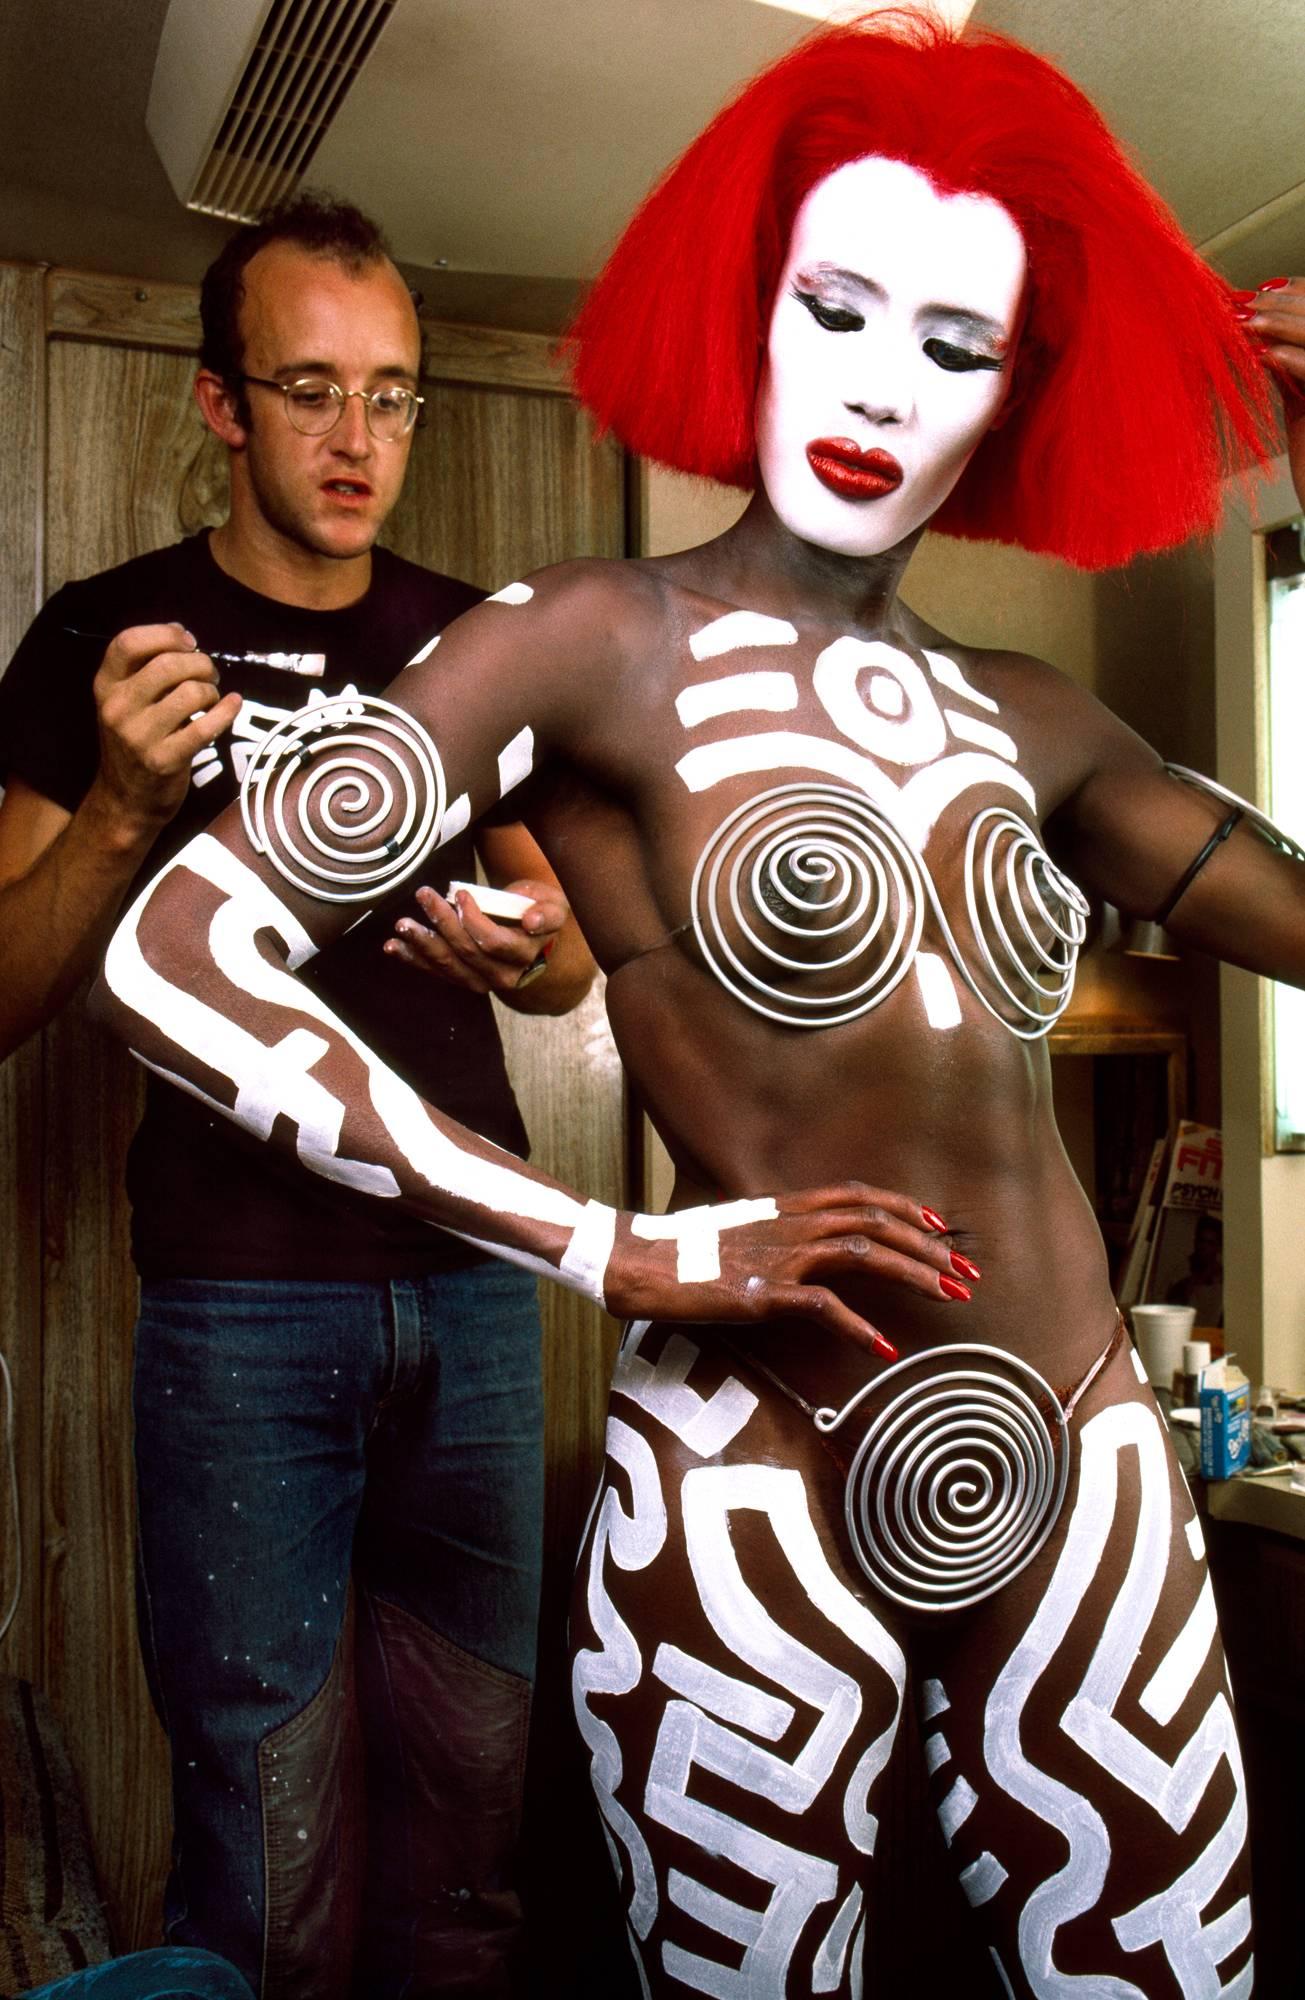 Douglas Kirkland Portrait Photograph - Keith Haring and Grace Jones - "Vamp" 1986